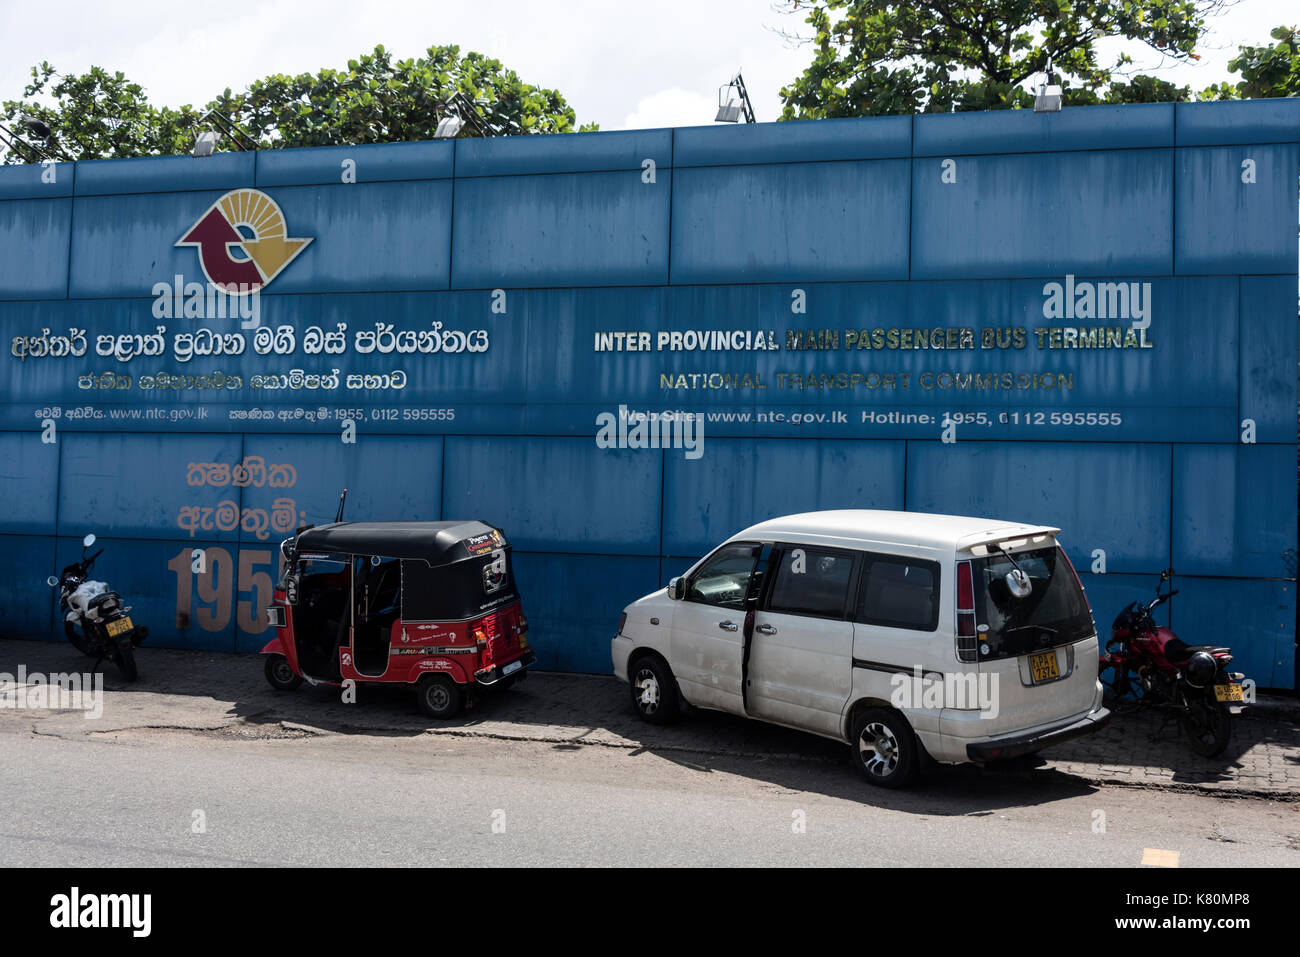 Inter-Provincial Main Passenger Bus Terminal in Olcott Mawatha, Colombo, Sri Lanka Stock Photo